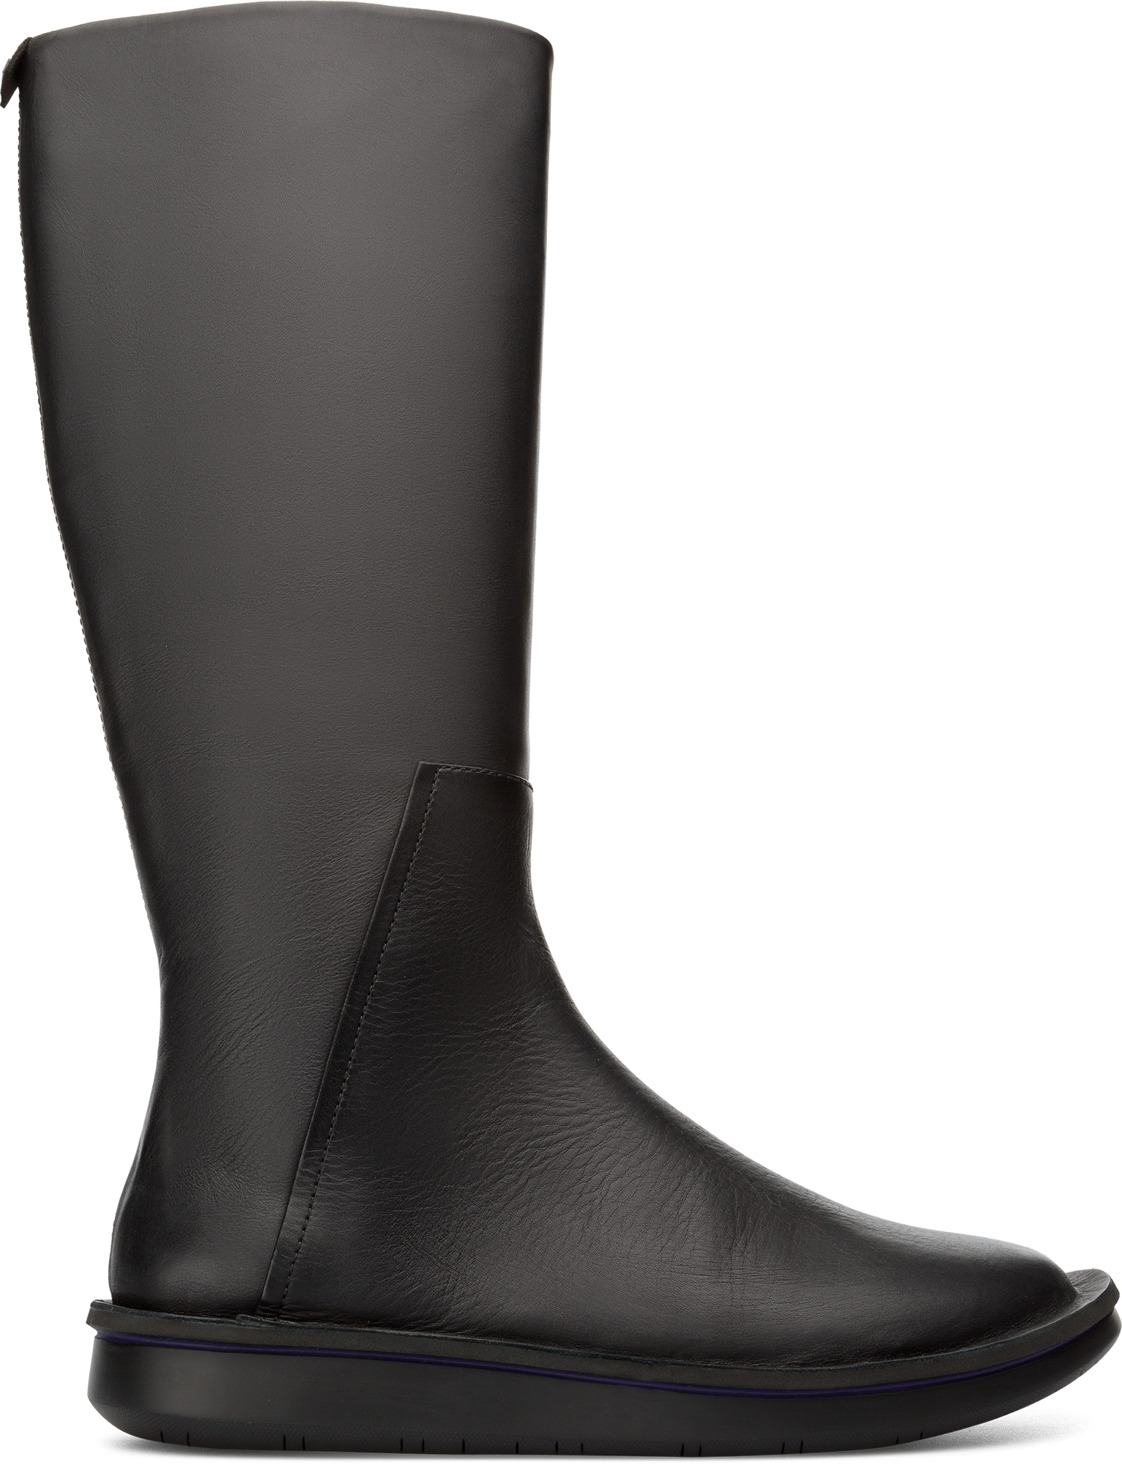 Formiga Black Boots for Women - Spring/Summer collection - Camper Australia